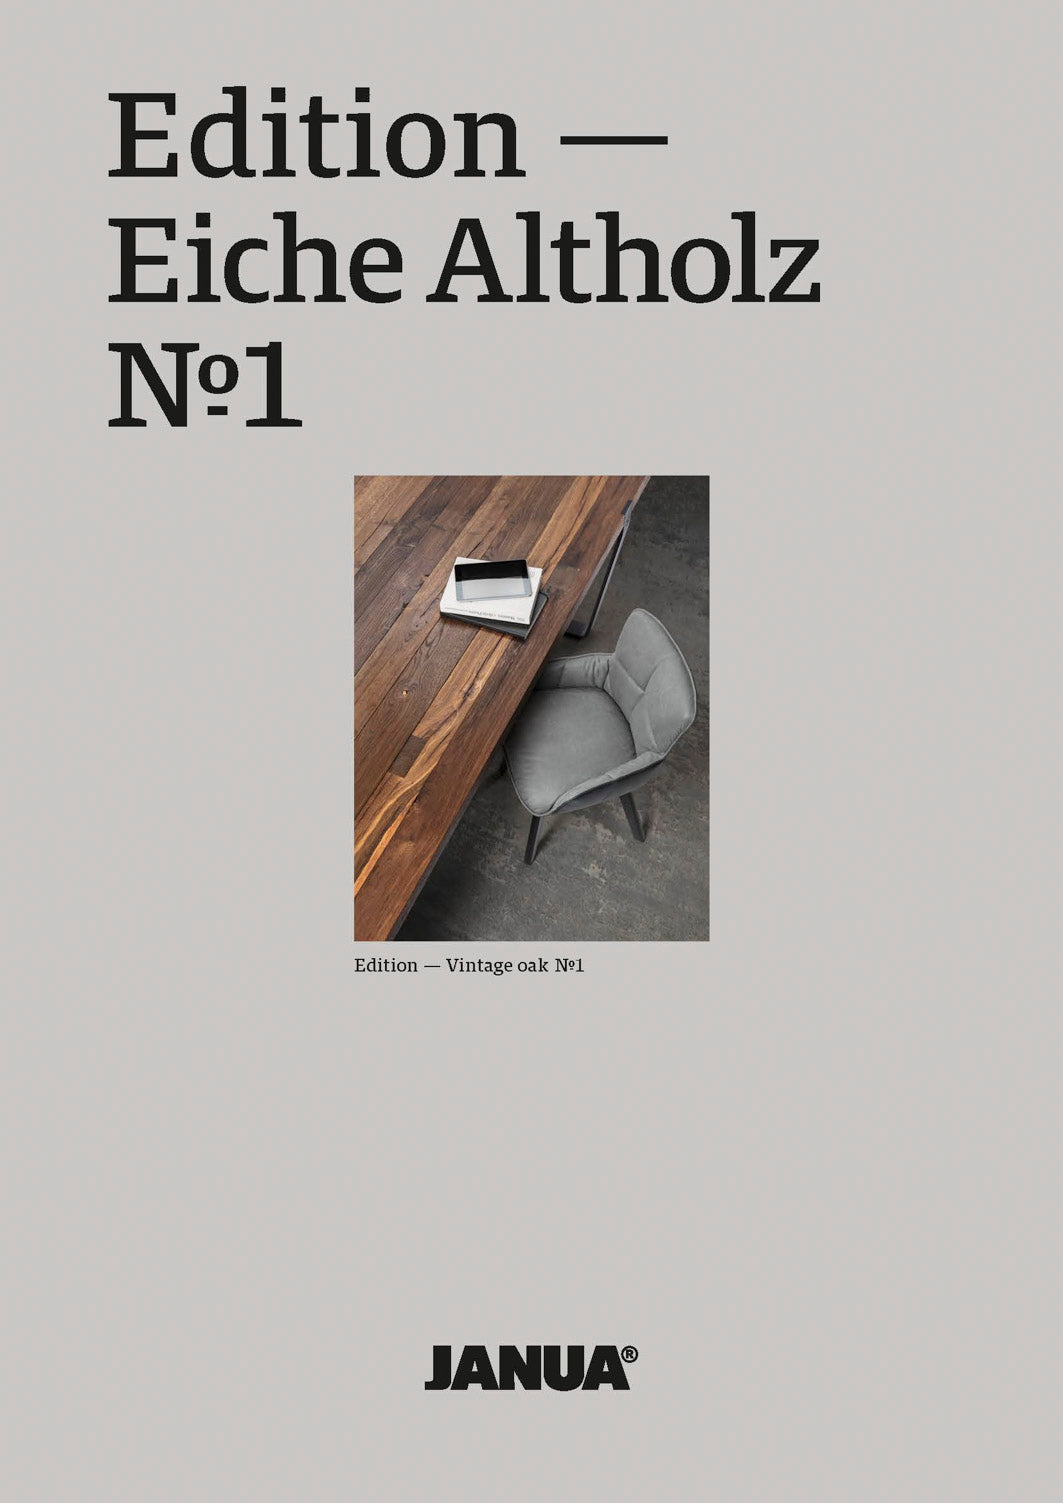 edition_altholz_N°1.jpg